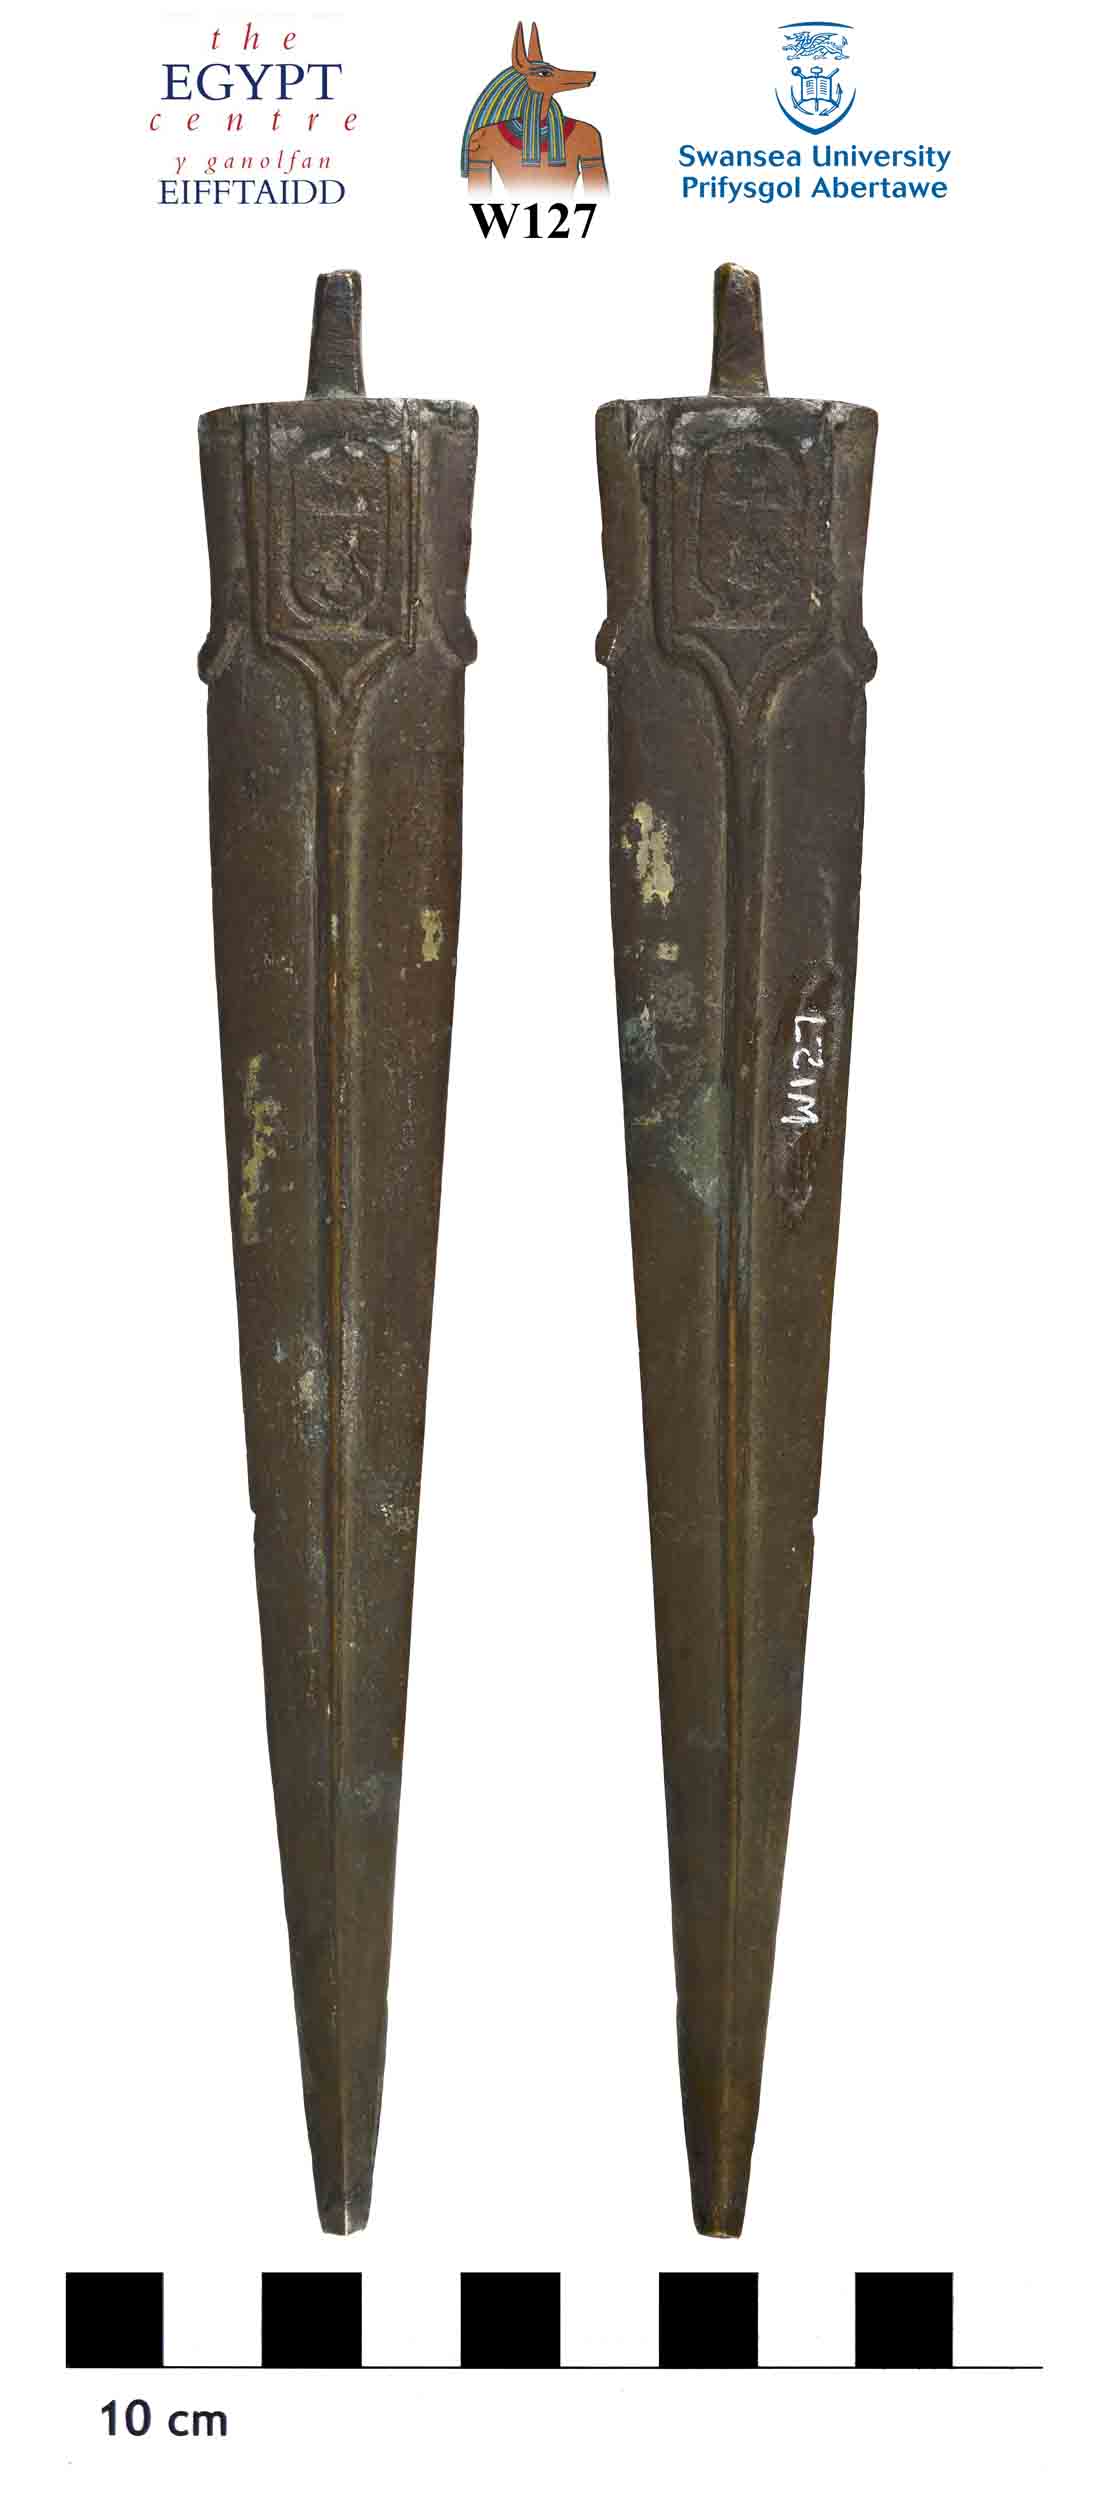 Image for: Copper alloy dagger